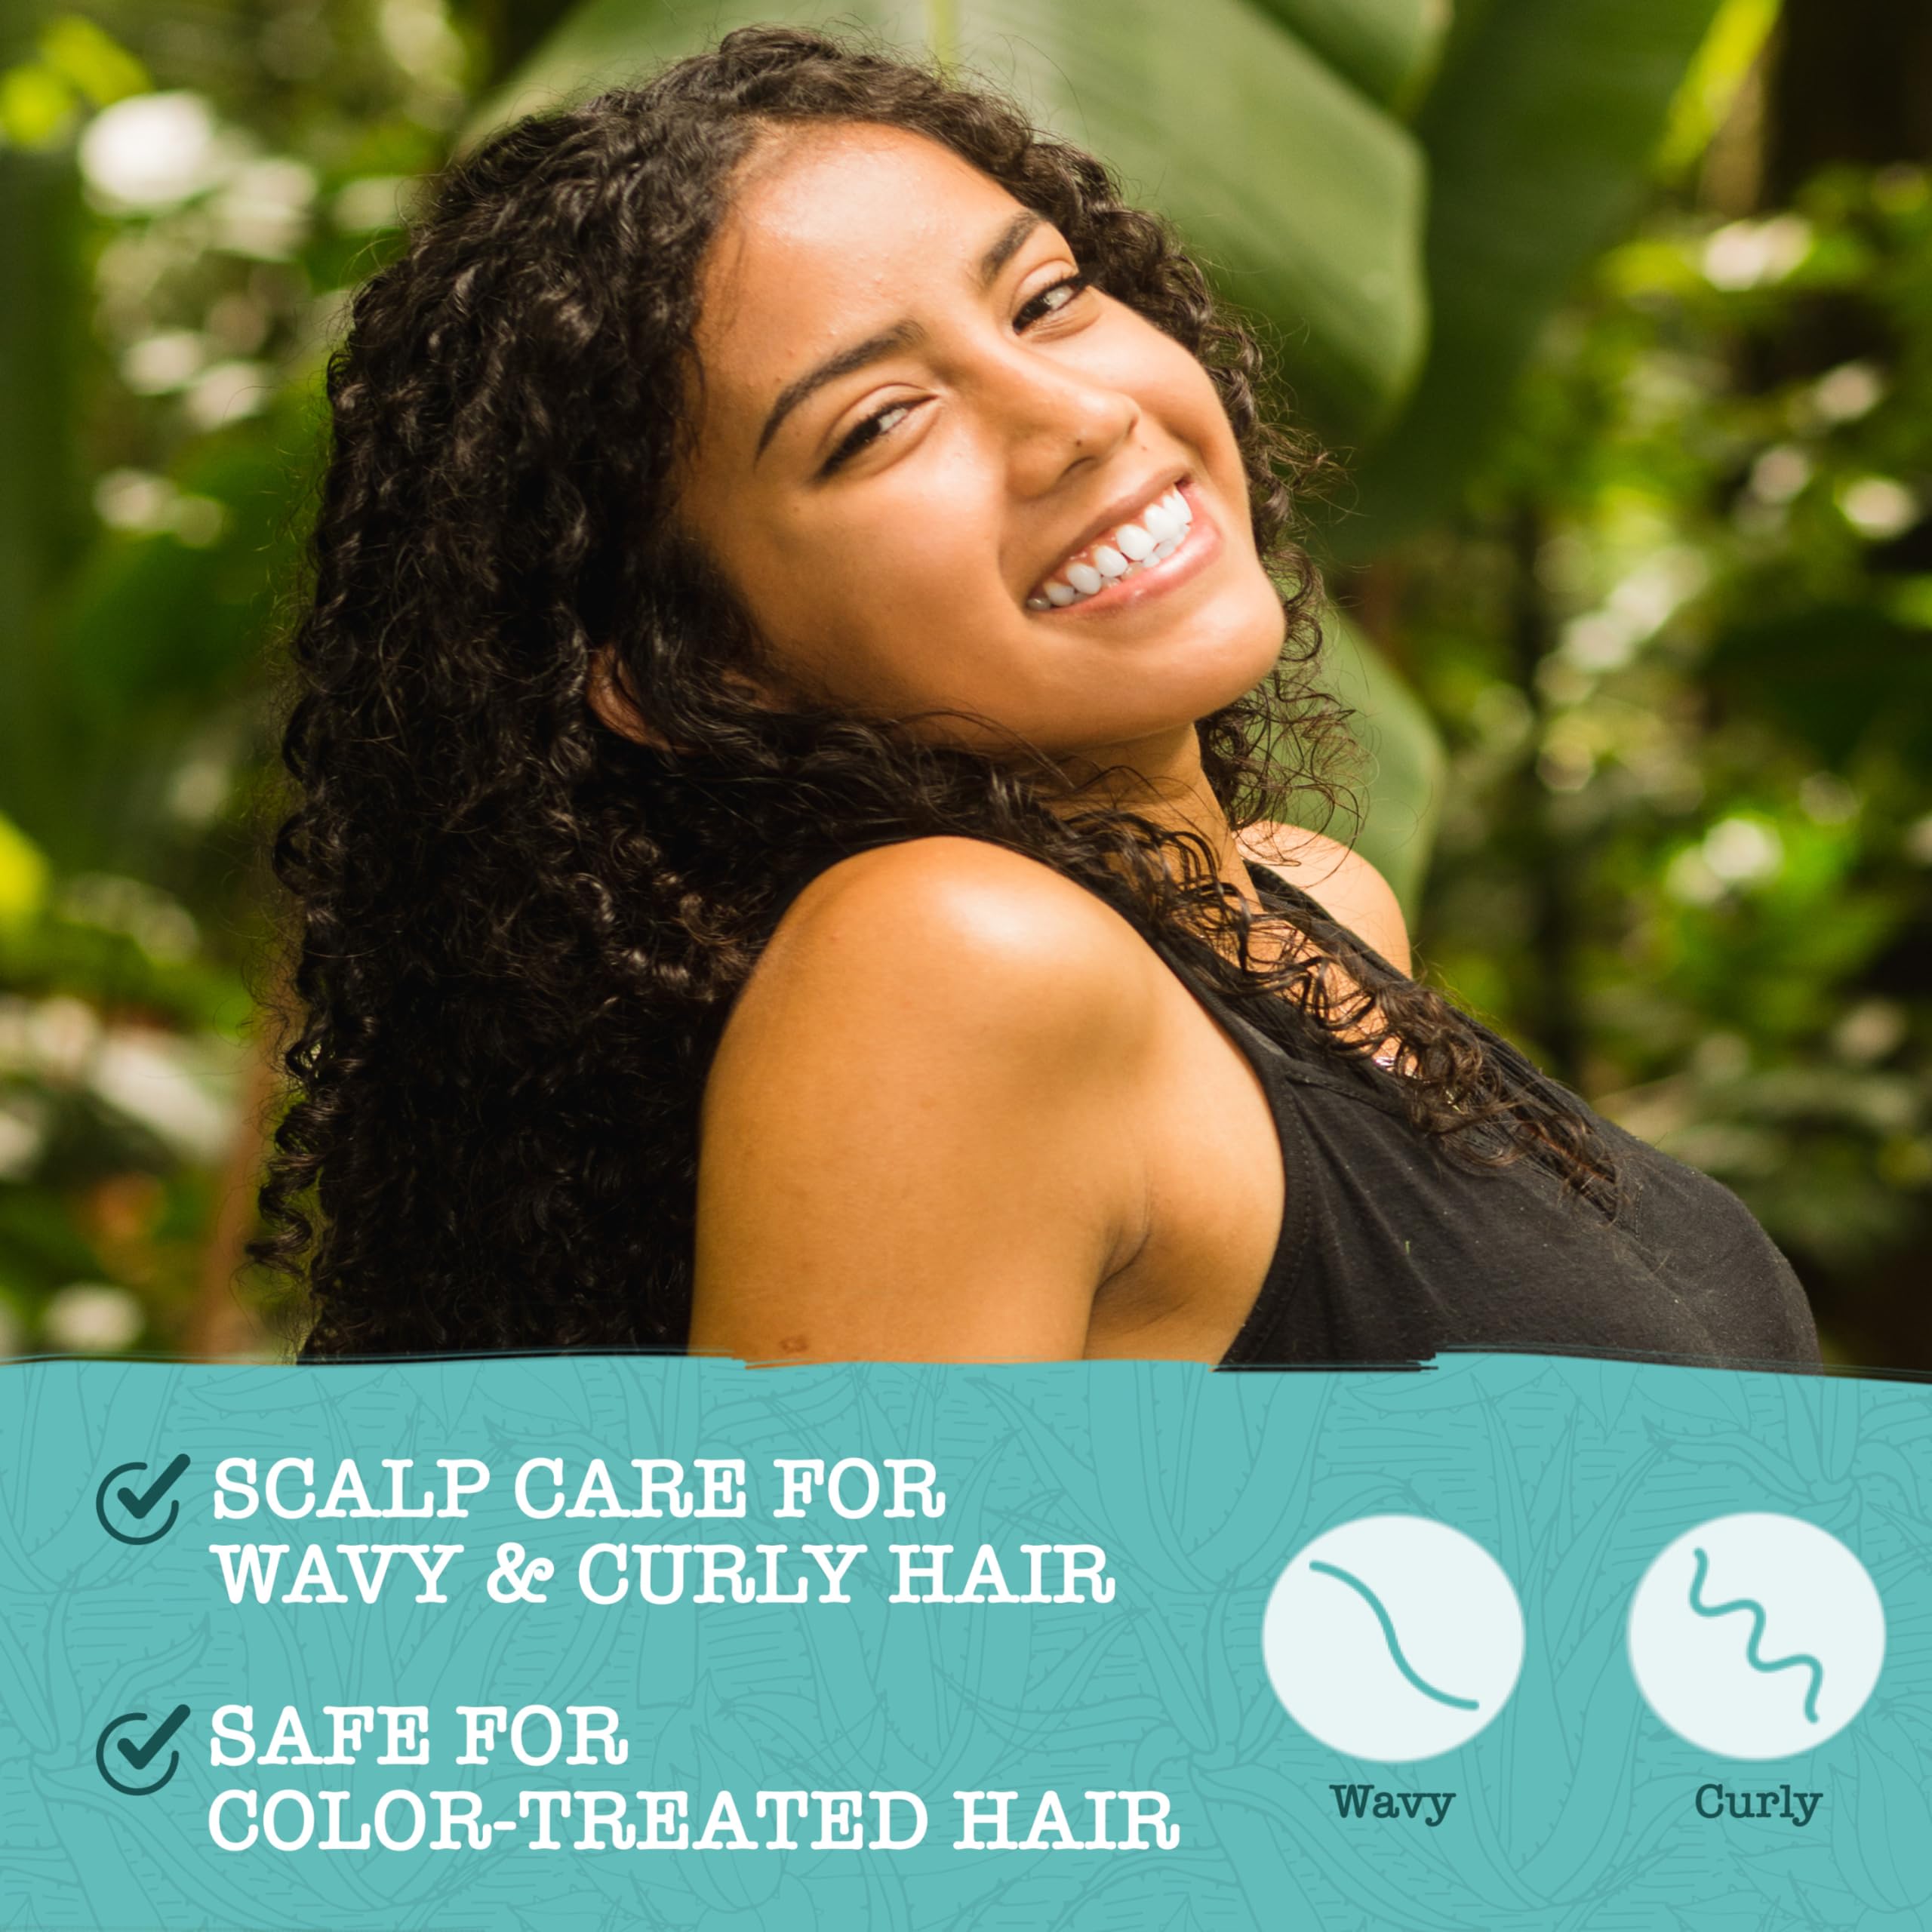 Maui Moisture Scalp Care Rejuvenating Conditioner, Soothing Curly Hair Conditioner with Vitamin E, Pro-Vitamin B5 & Aloe Vera, Silicone-Free, 13 fl. oz